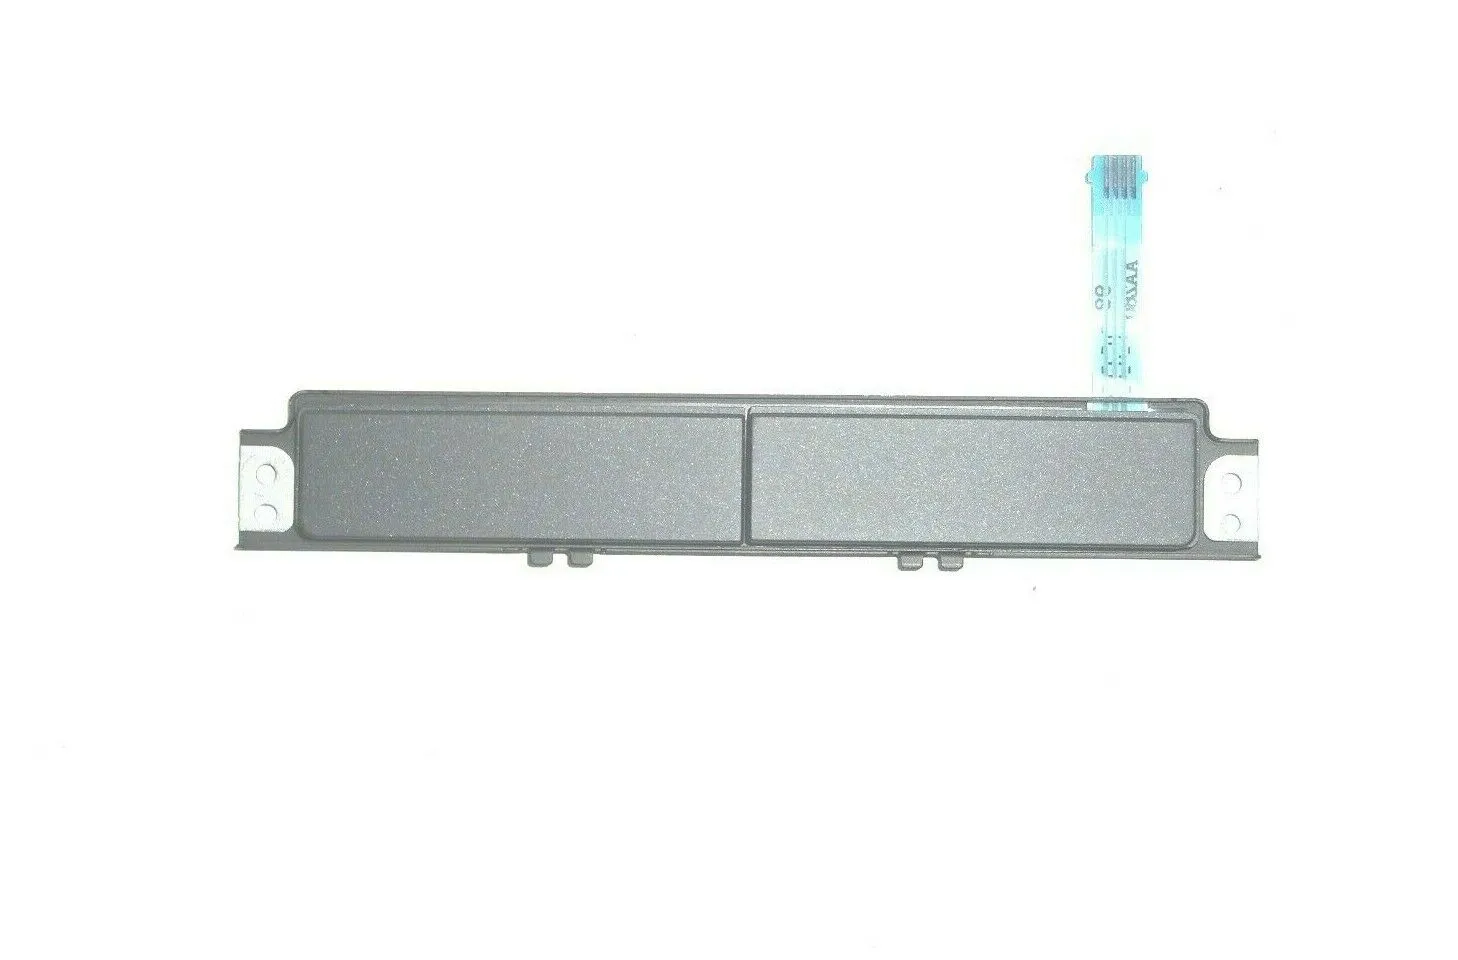 Dell E7470 용 원본 노트북 터치 패드 버튼 왼쪽 오른쪽 버튼 LR 버튼 A151E1 CN-A151E1